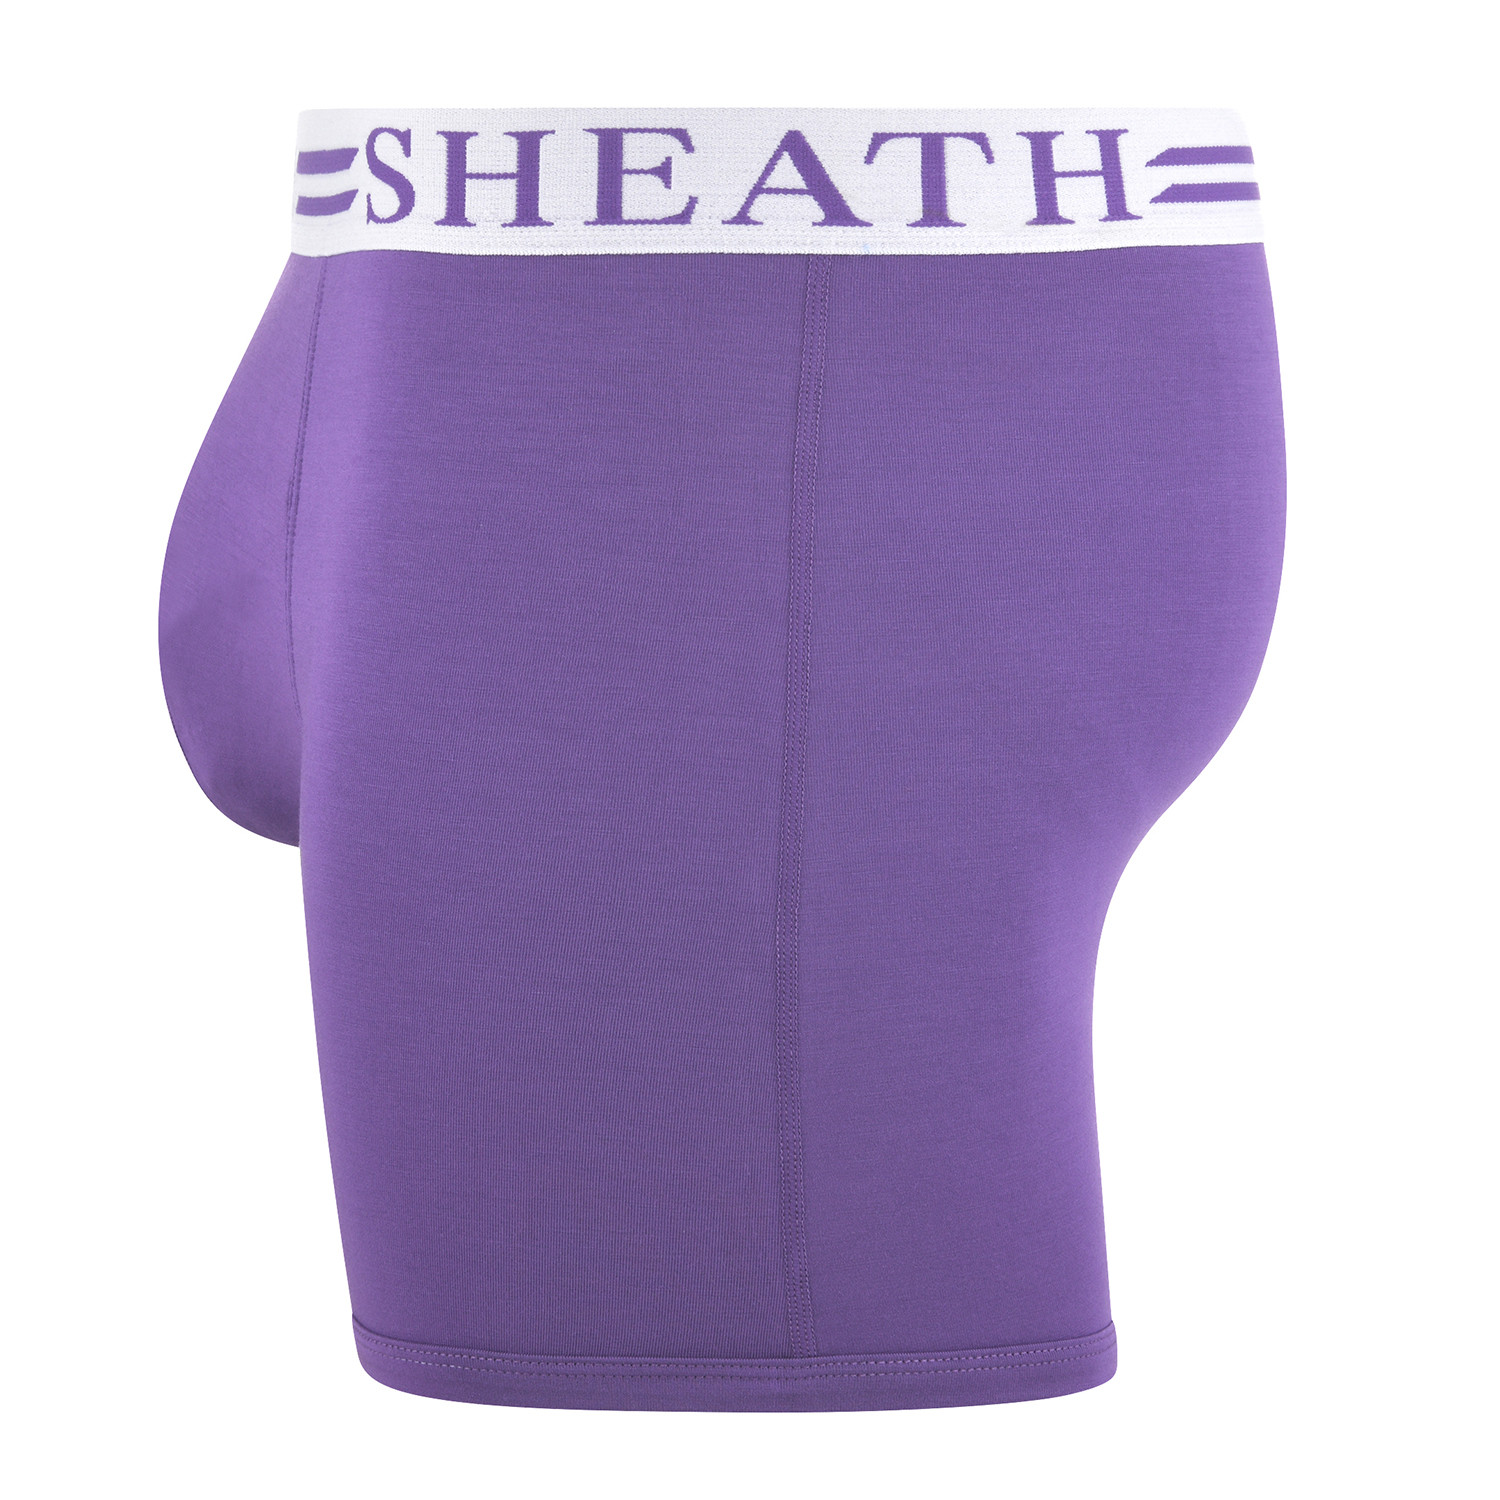 Sheath 4.0 Dual Pouch Boxer Brief // Purple (X-Large) - Sheath